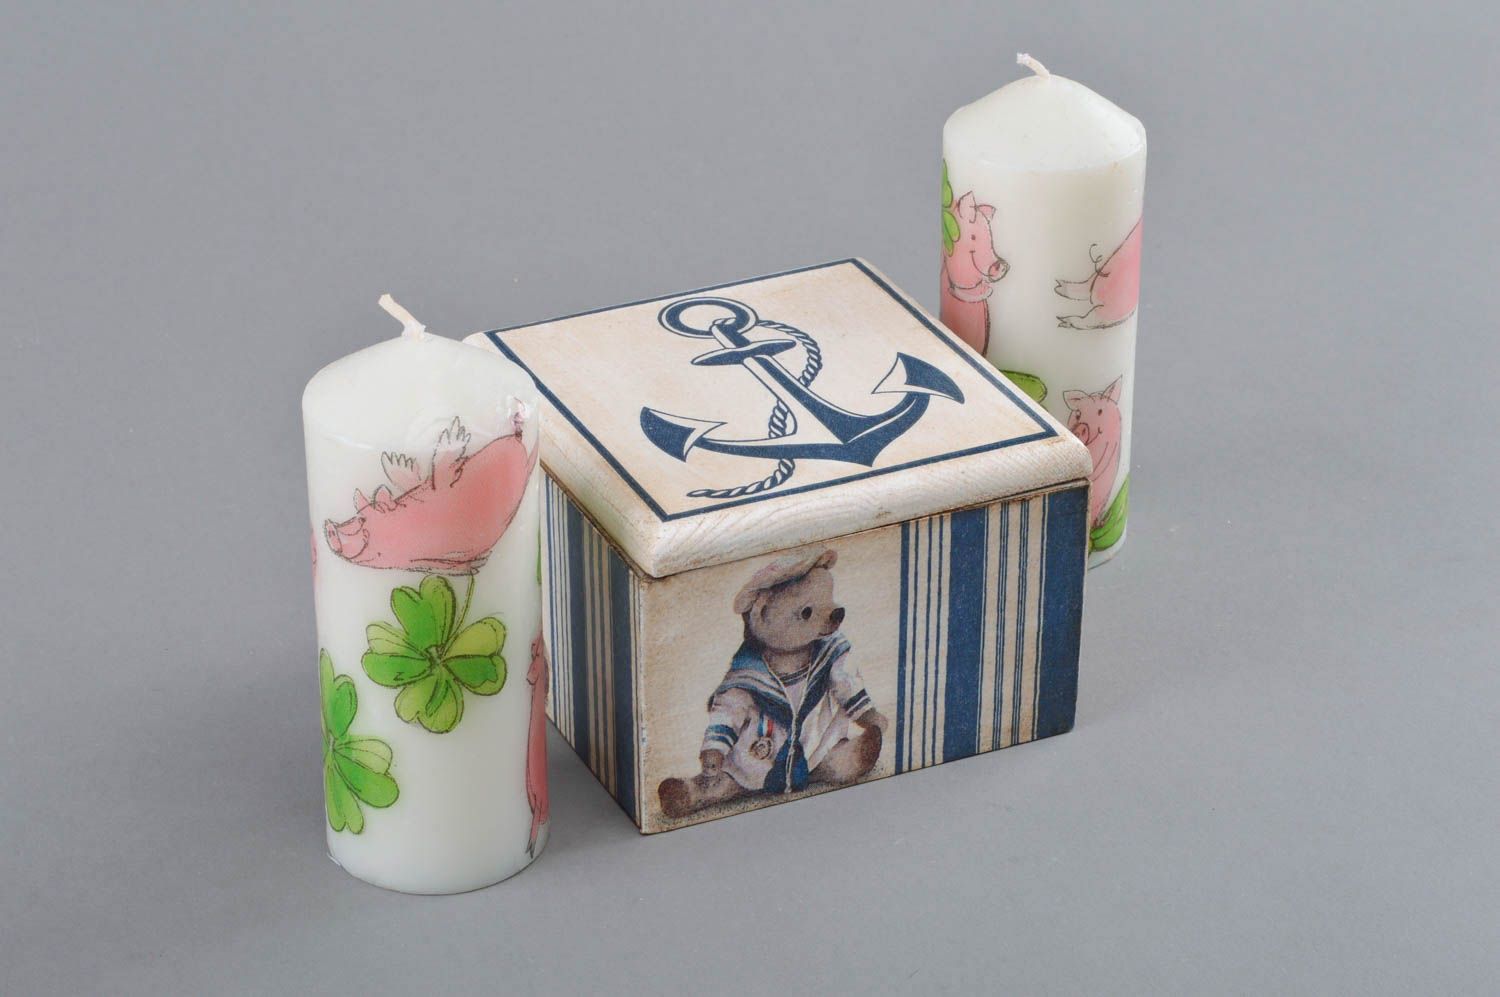 Handmade decorative decoupage small square wooden jewelry box in marine style photo 1